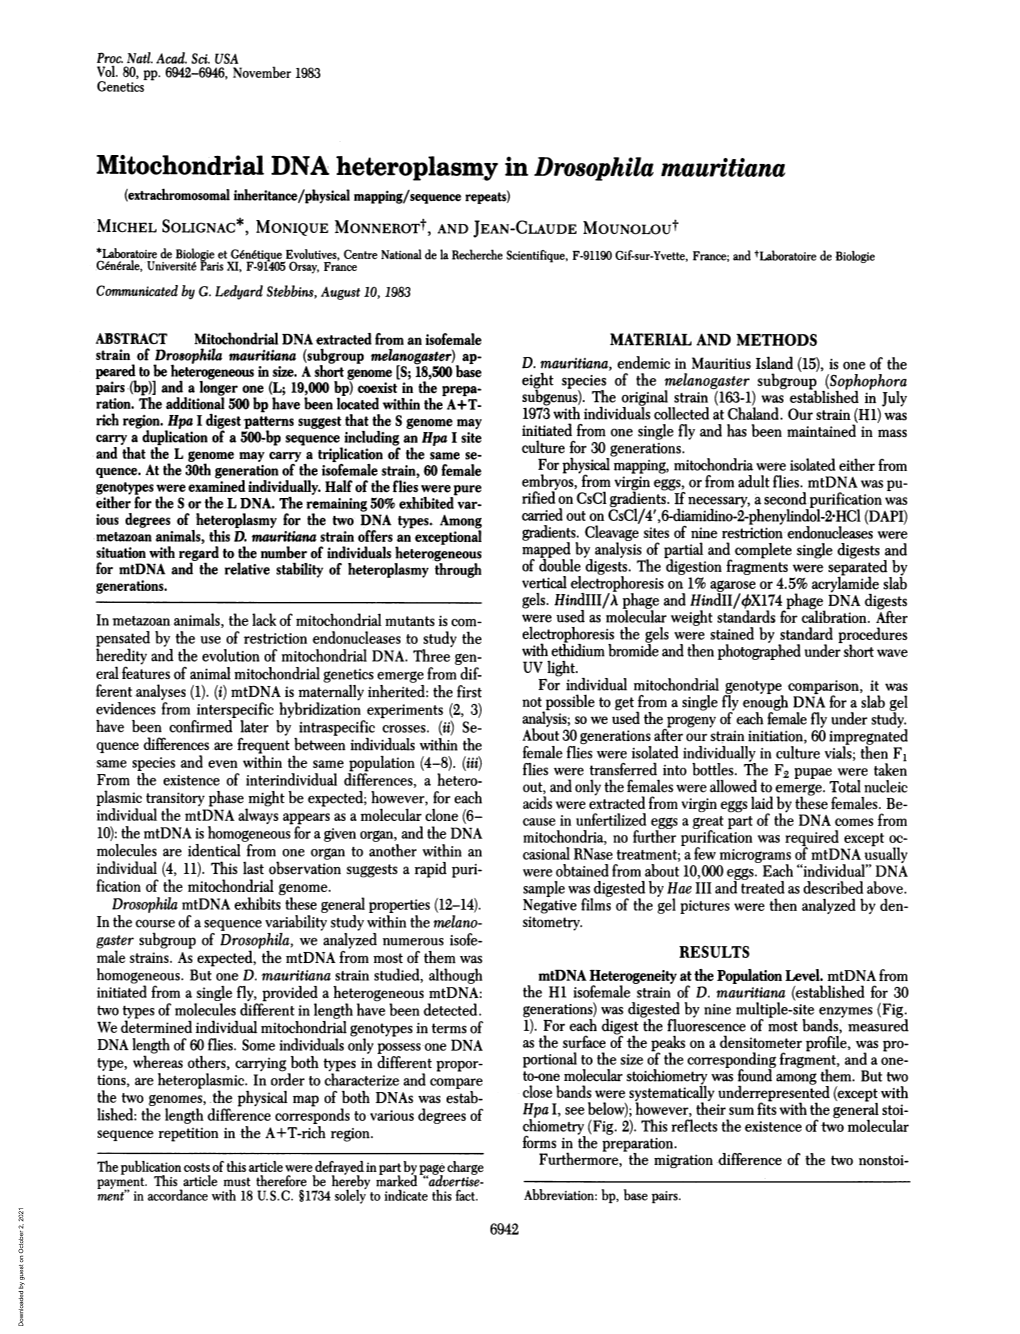 Mitochondrial DNA Heteroplasmy in Drosophila Mauritiana